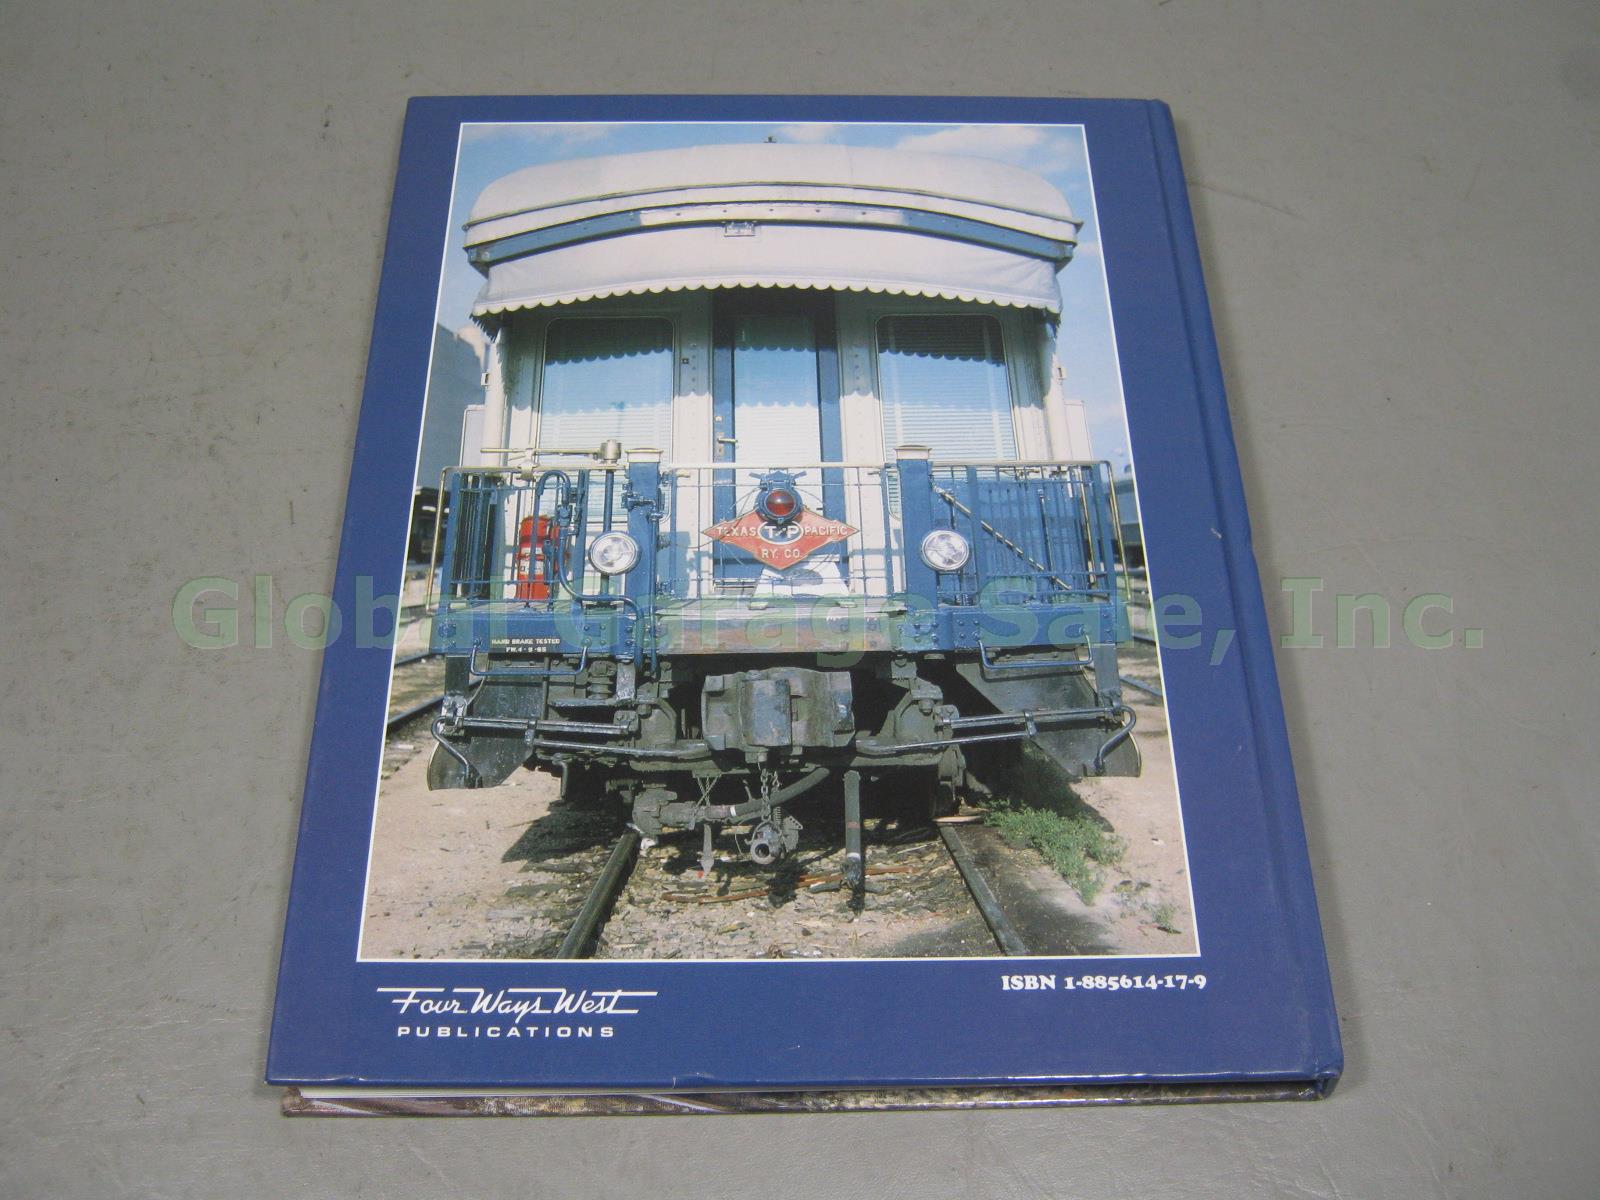 SIGNED Texas & Pacific Color Pictorial Railroad Train Book Steve Allen Goen 1997 4